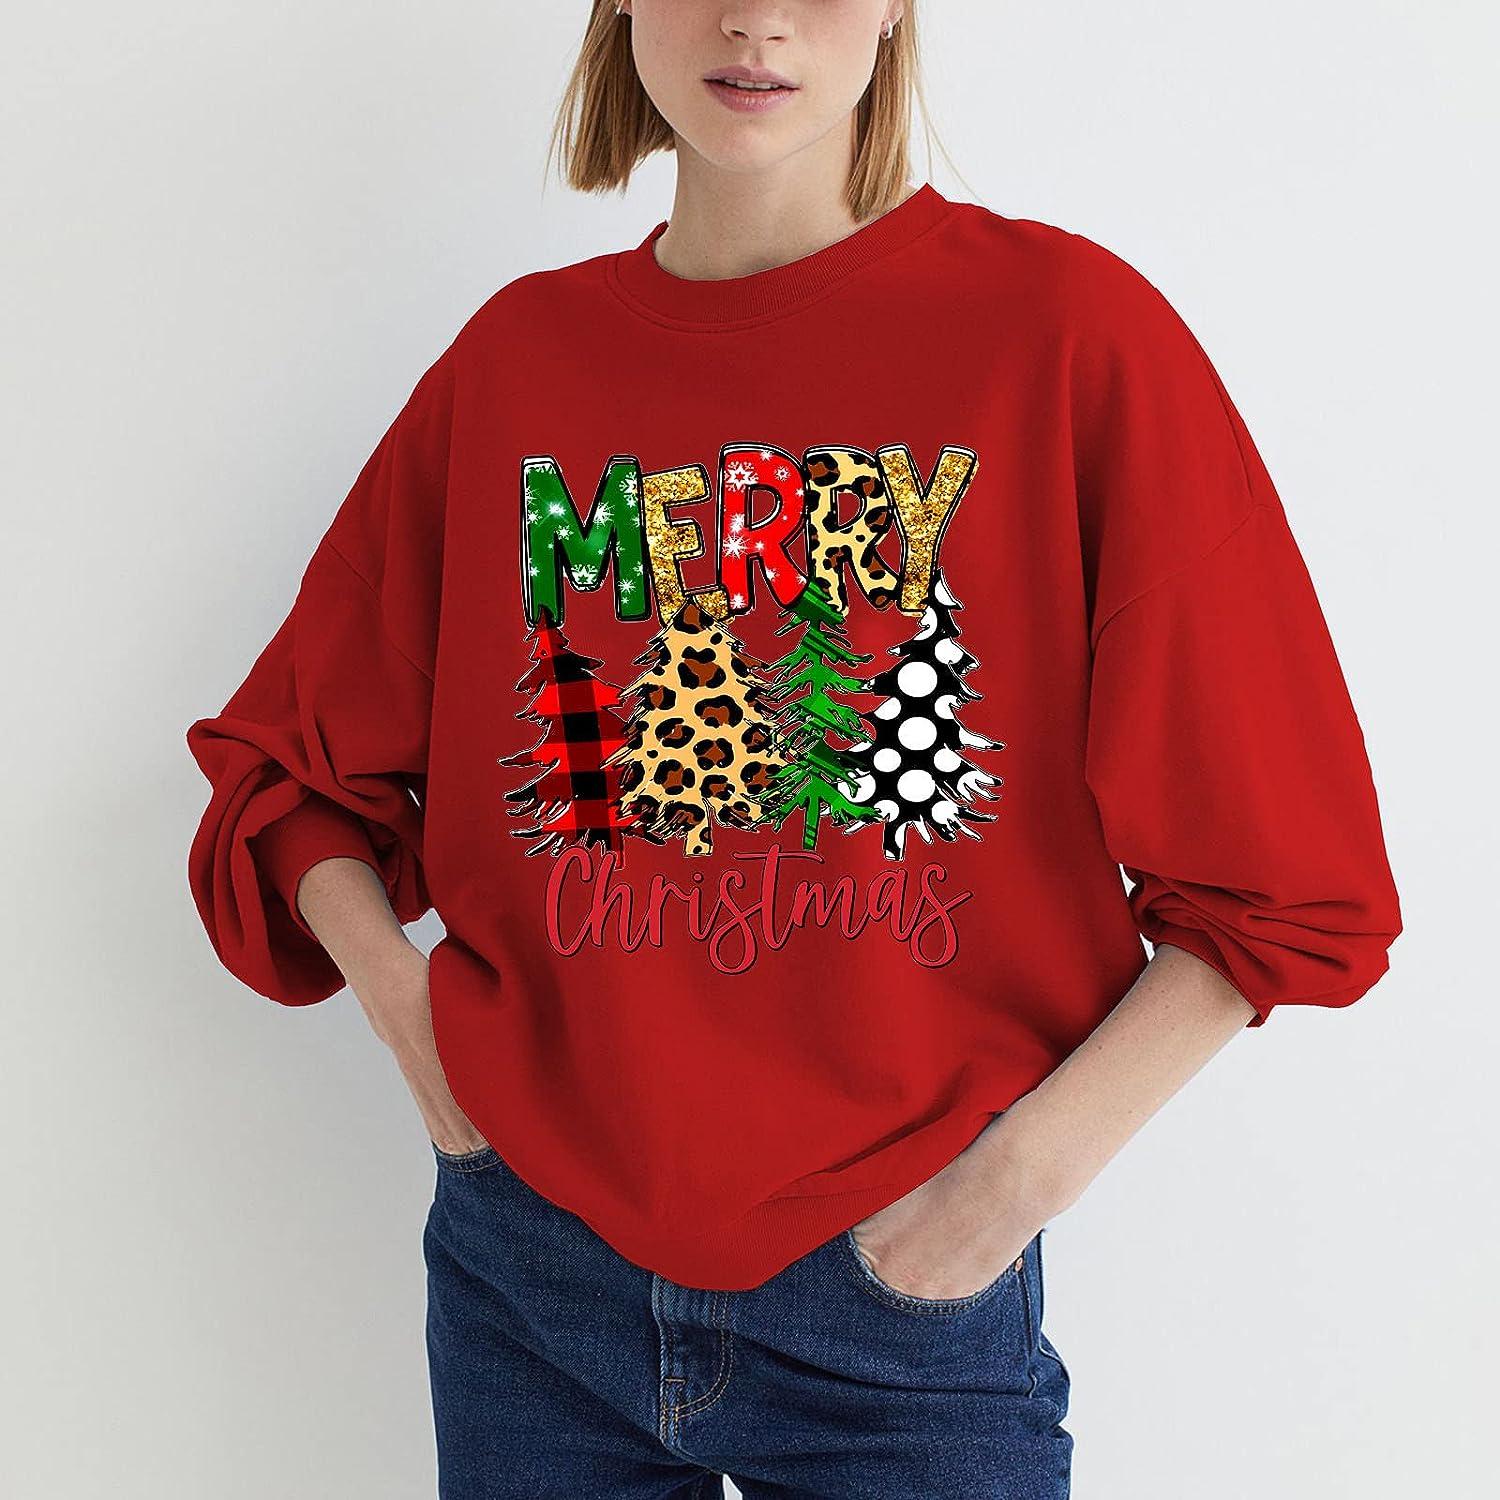 Plus Size Dress Tops Womens Christmas V Neck Pullover Sweatshirt